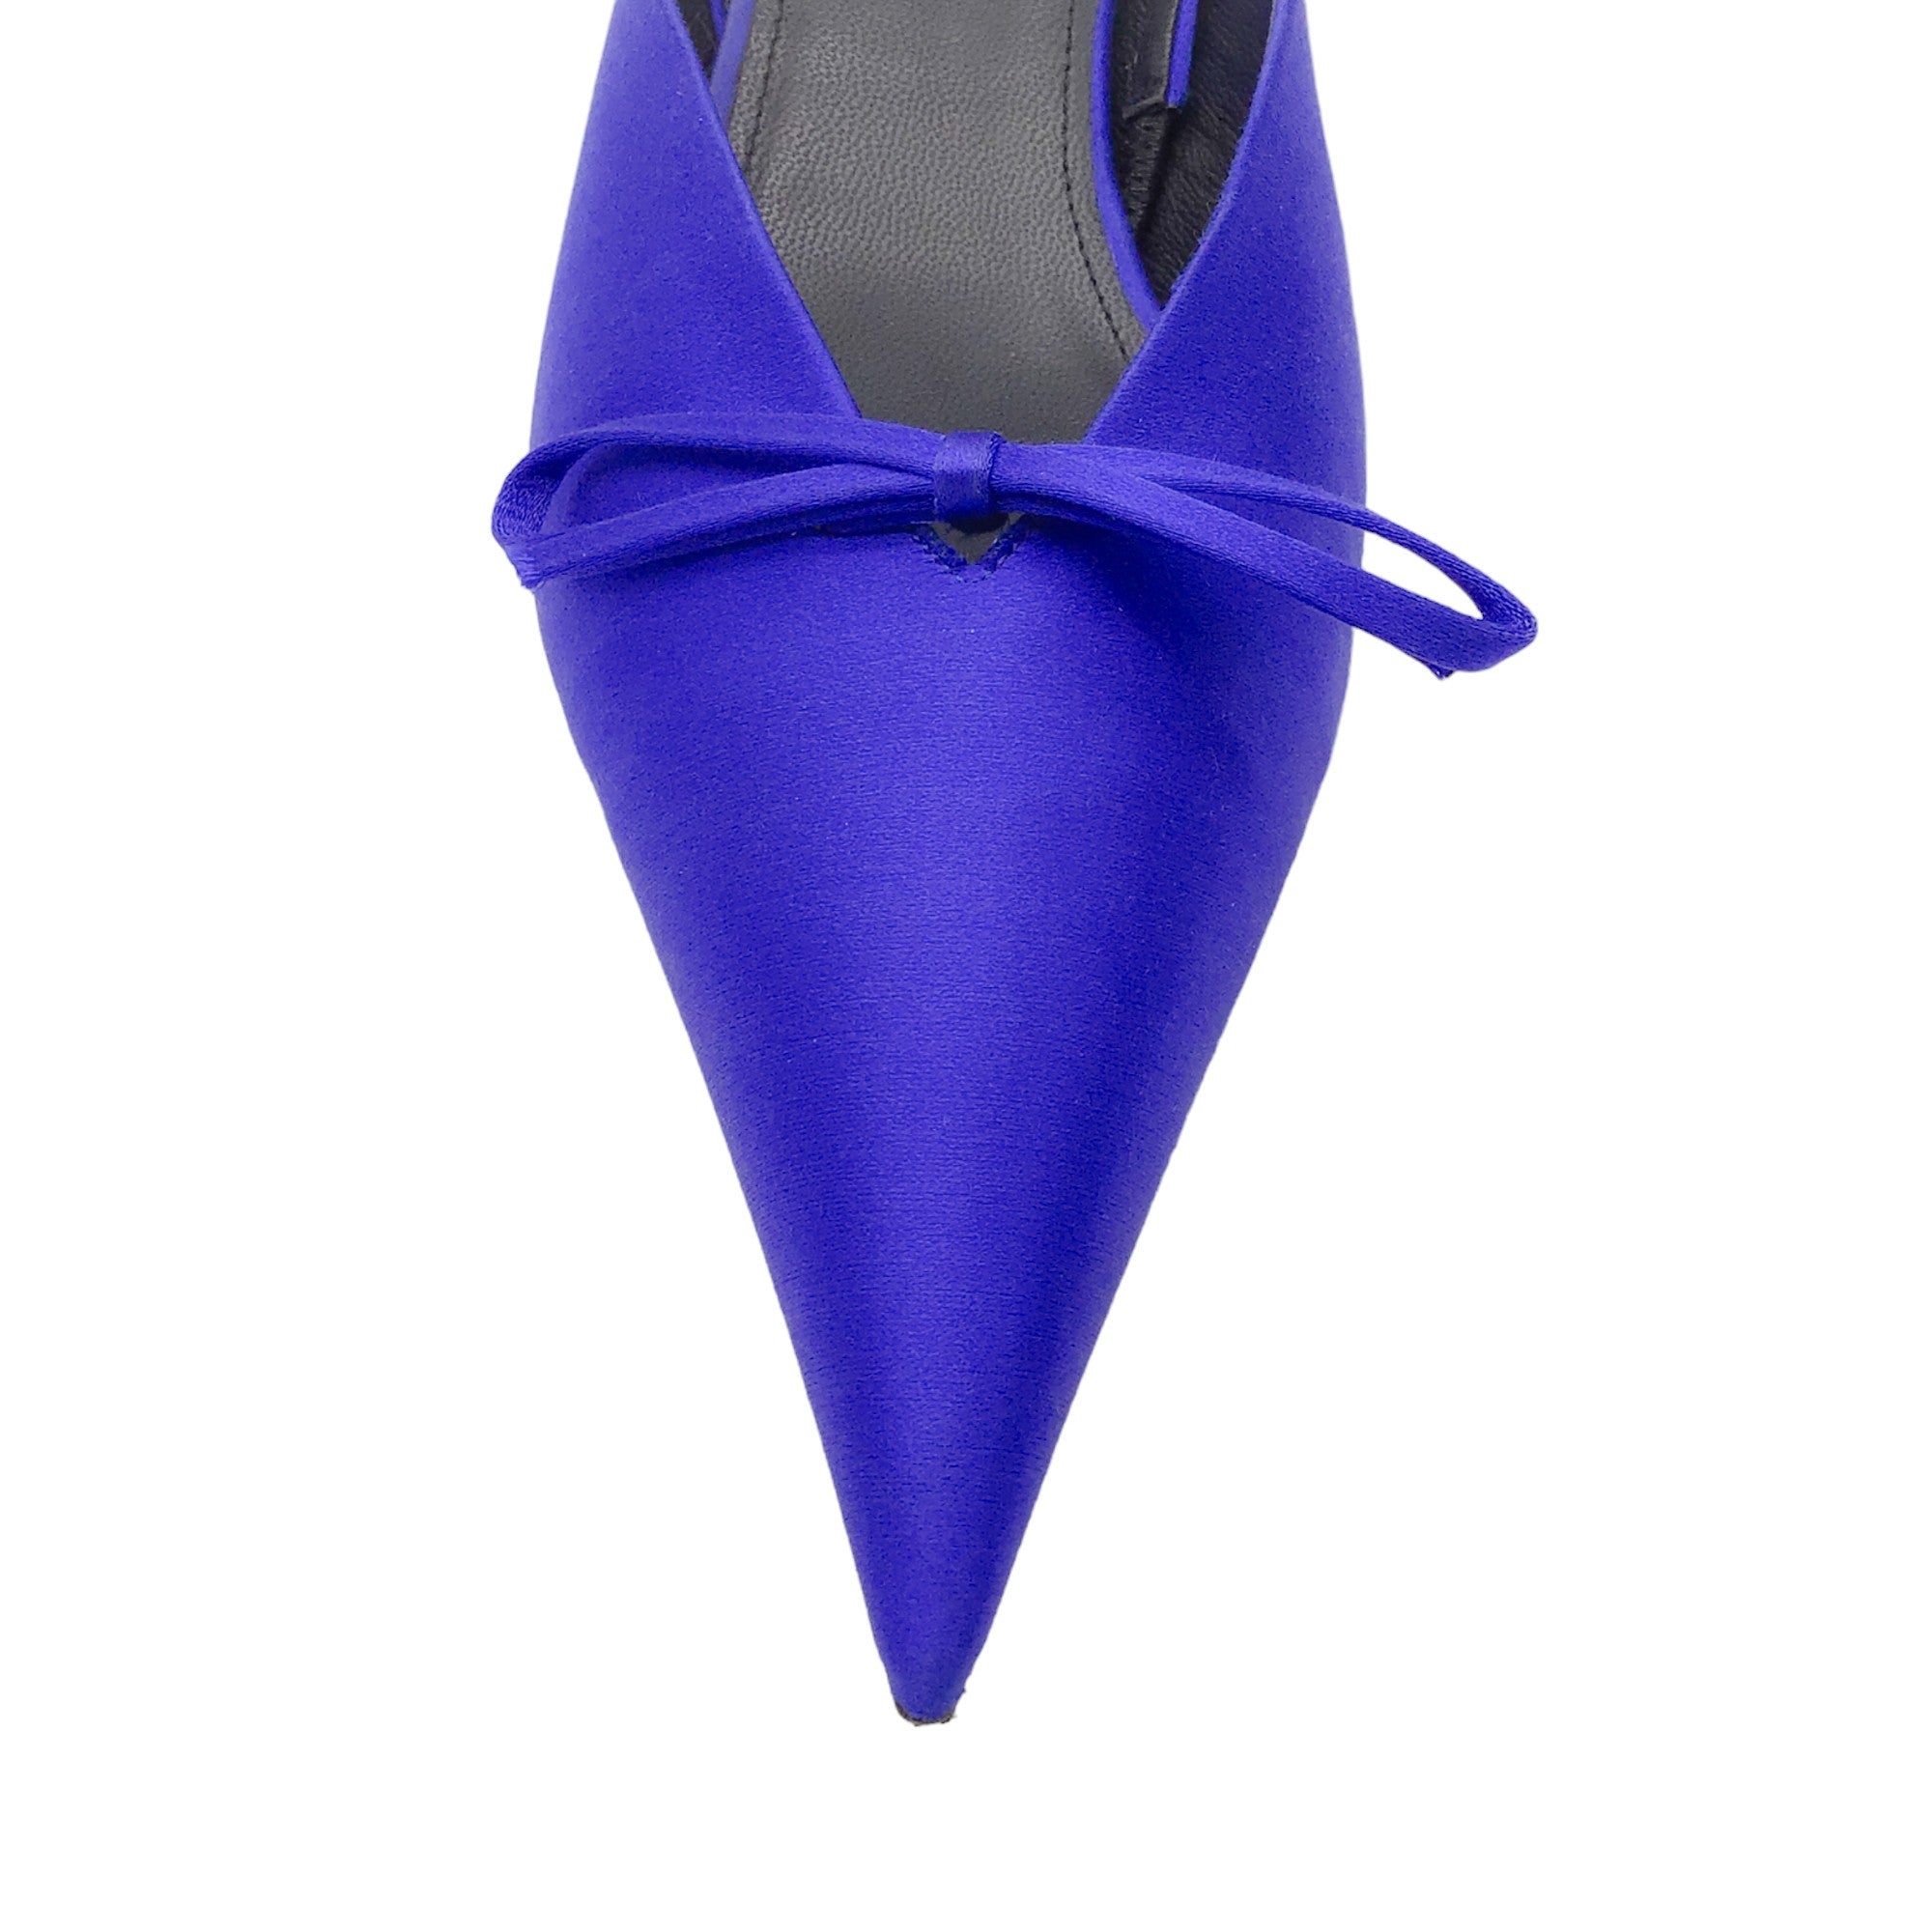 Balenciaga Cobalt Blue Bow Detail Pointed Toe Low Heel Satin Slingback Pumps